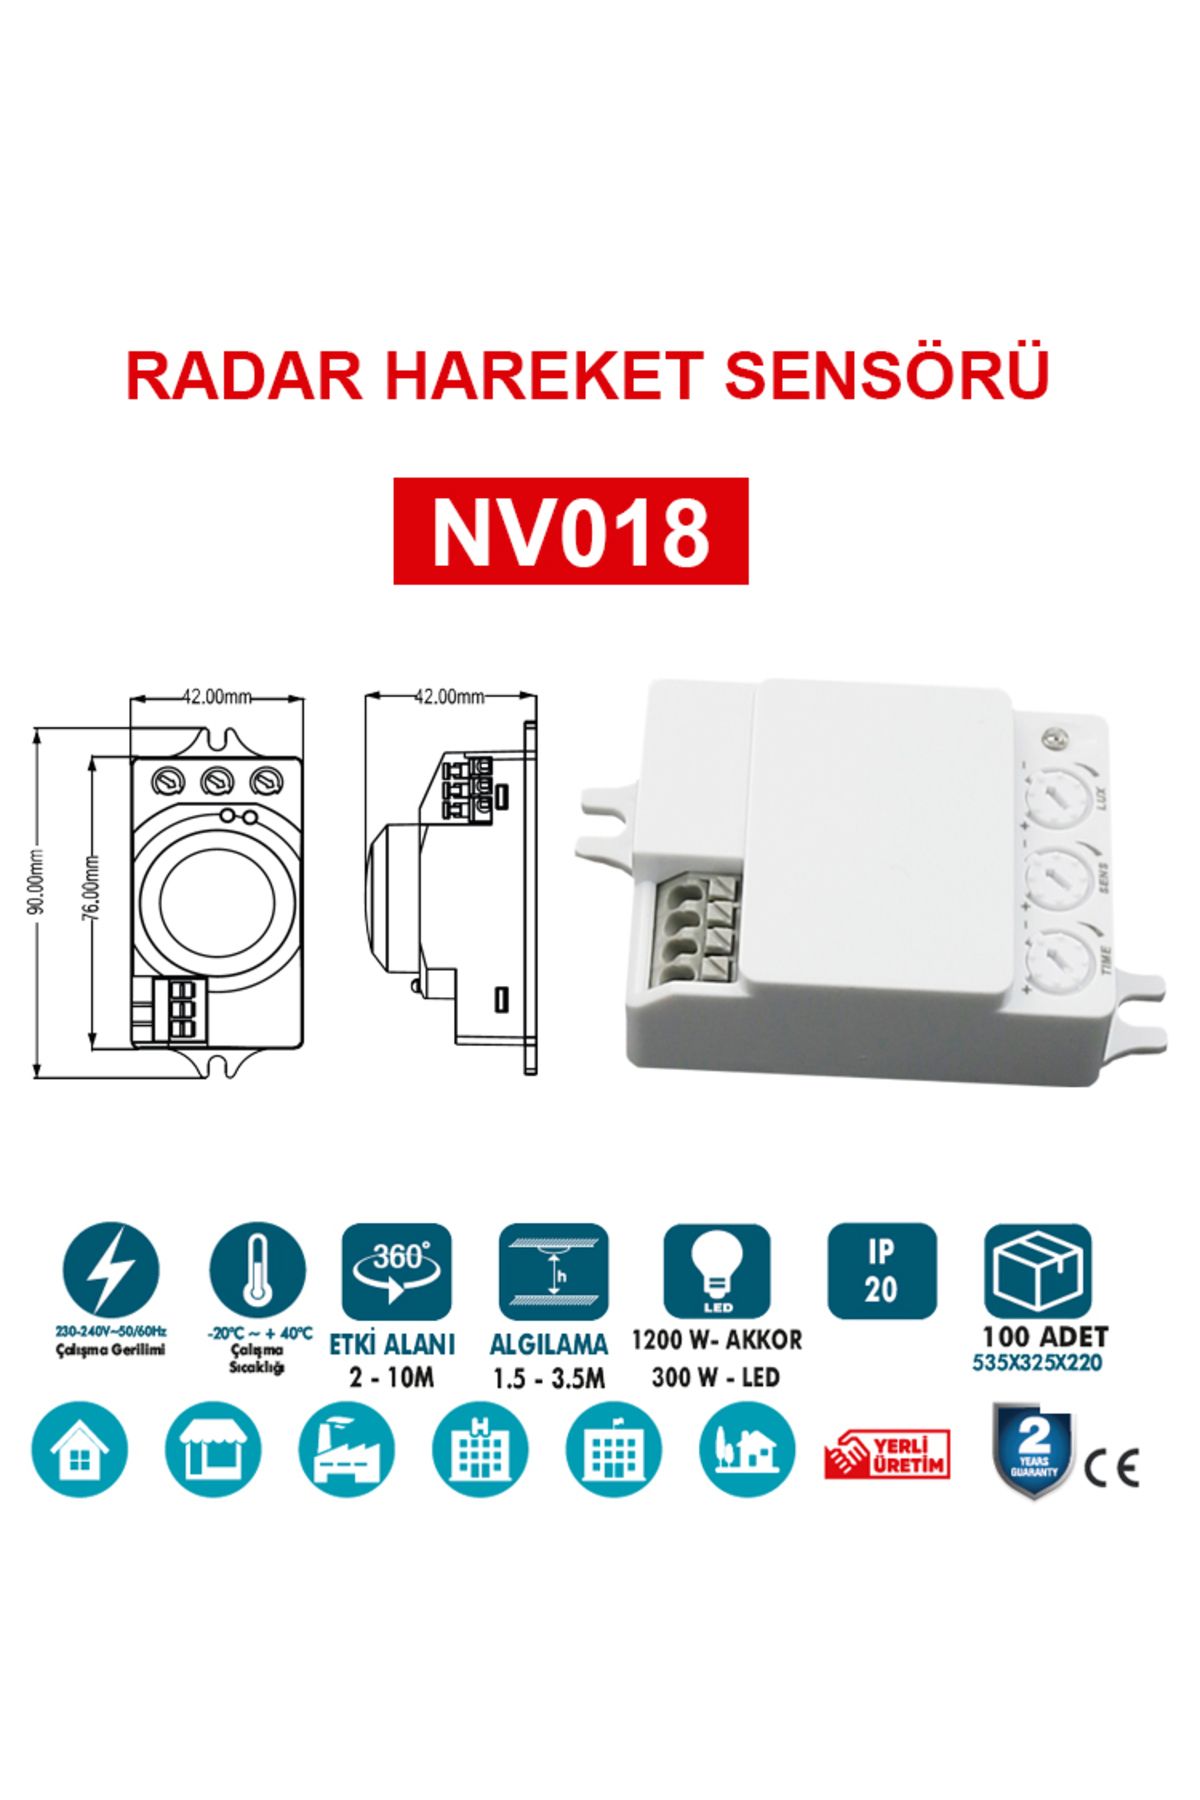 Novo Radar Hareket Sensörü (NV018)